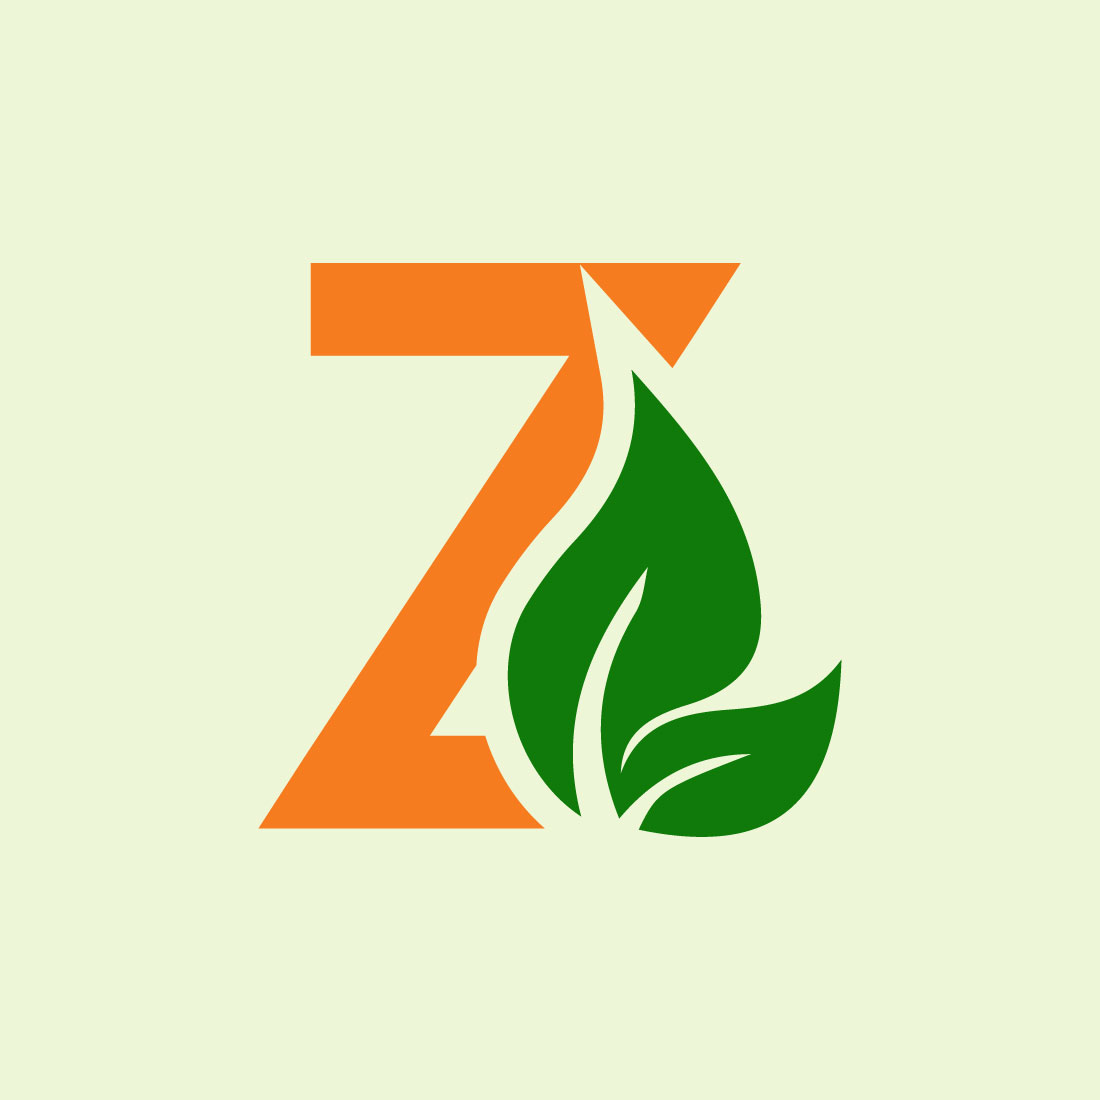 Free Z company branding Logo cover image.